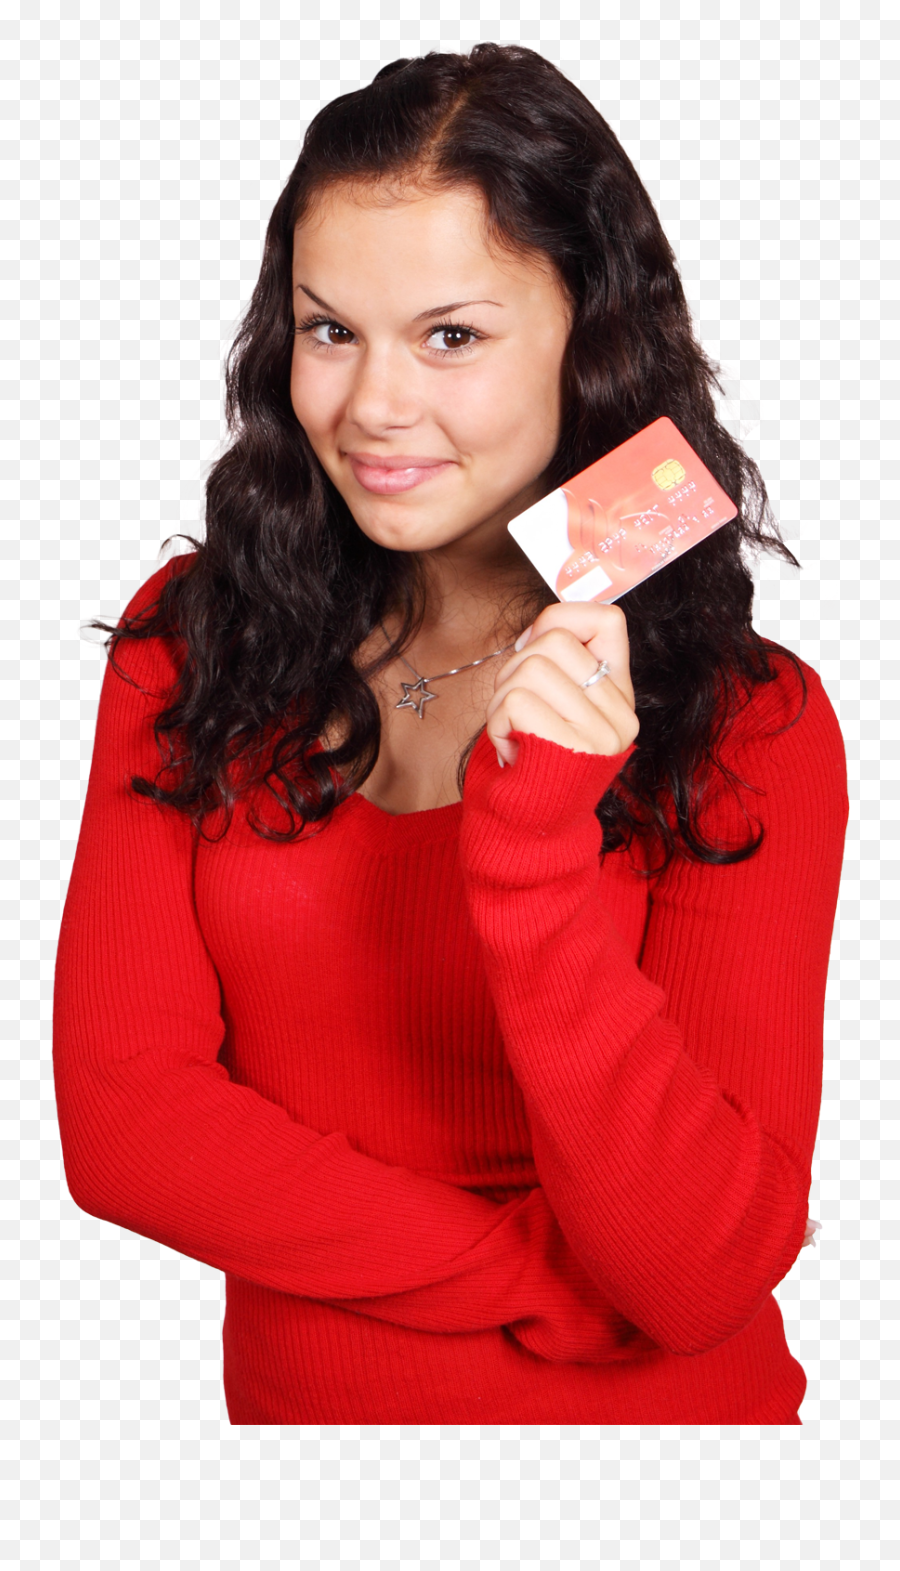 Smiling Girl Holding Credit Card Png Image - Pngpix Girl Holding Card Png,Credit Card Png